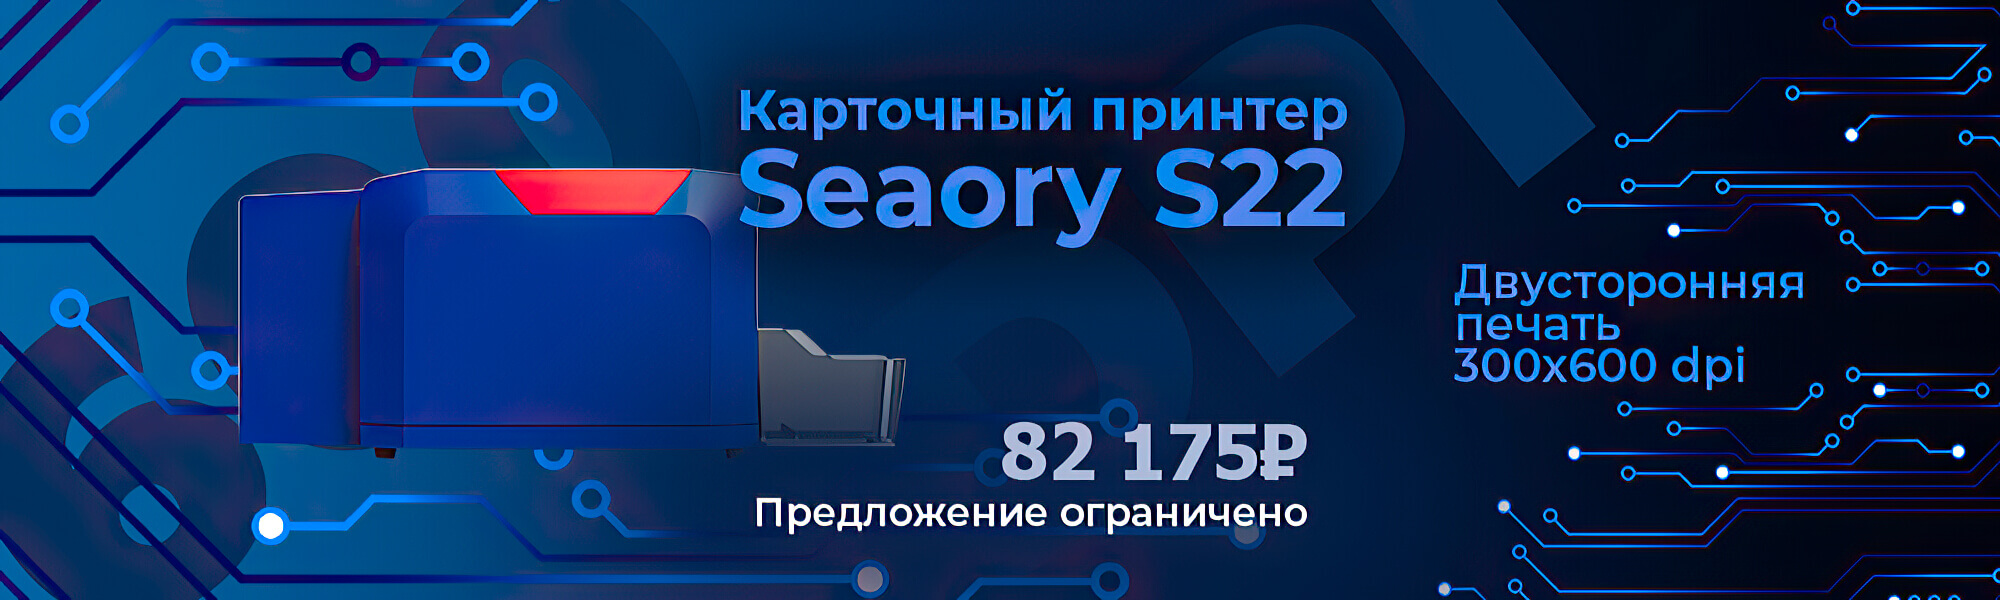 Seaory22-Start-sale